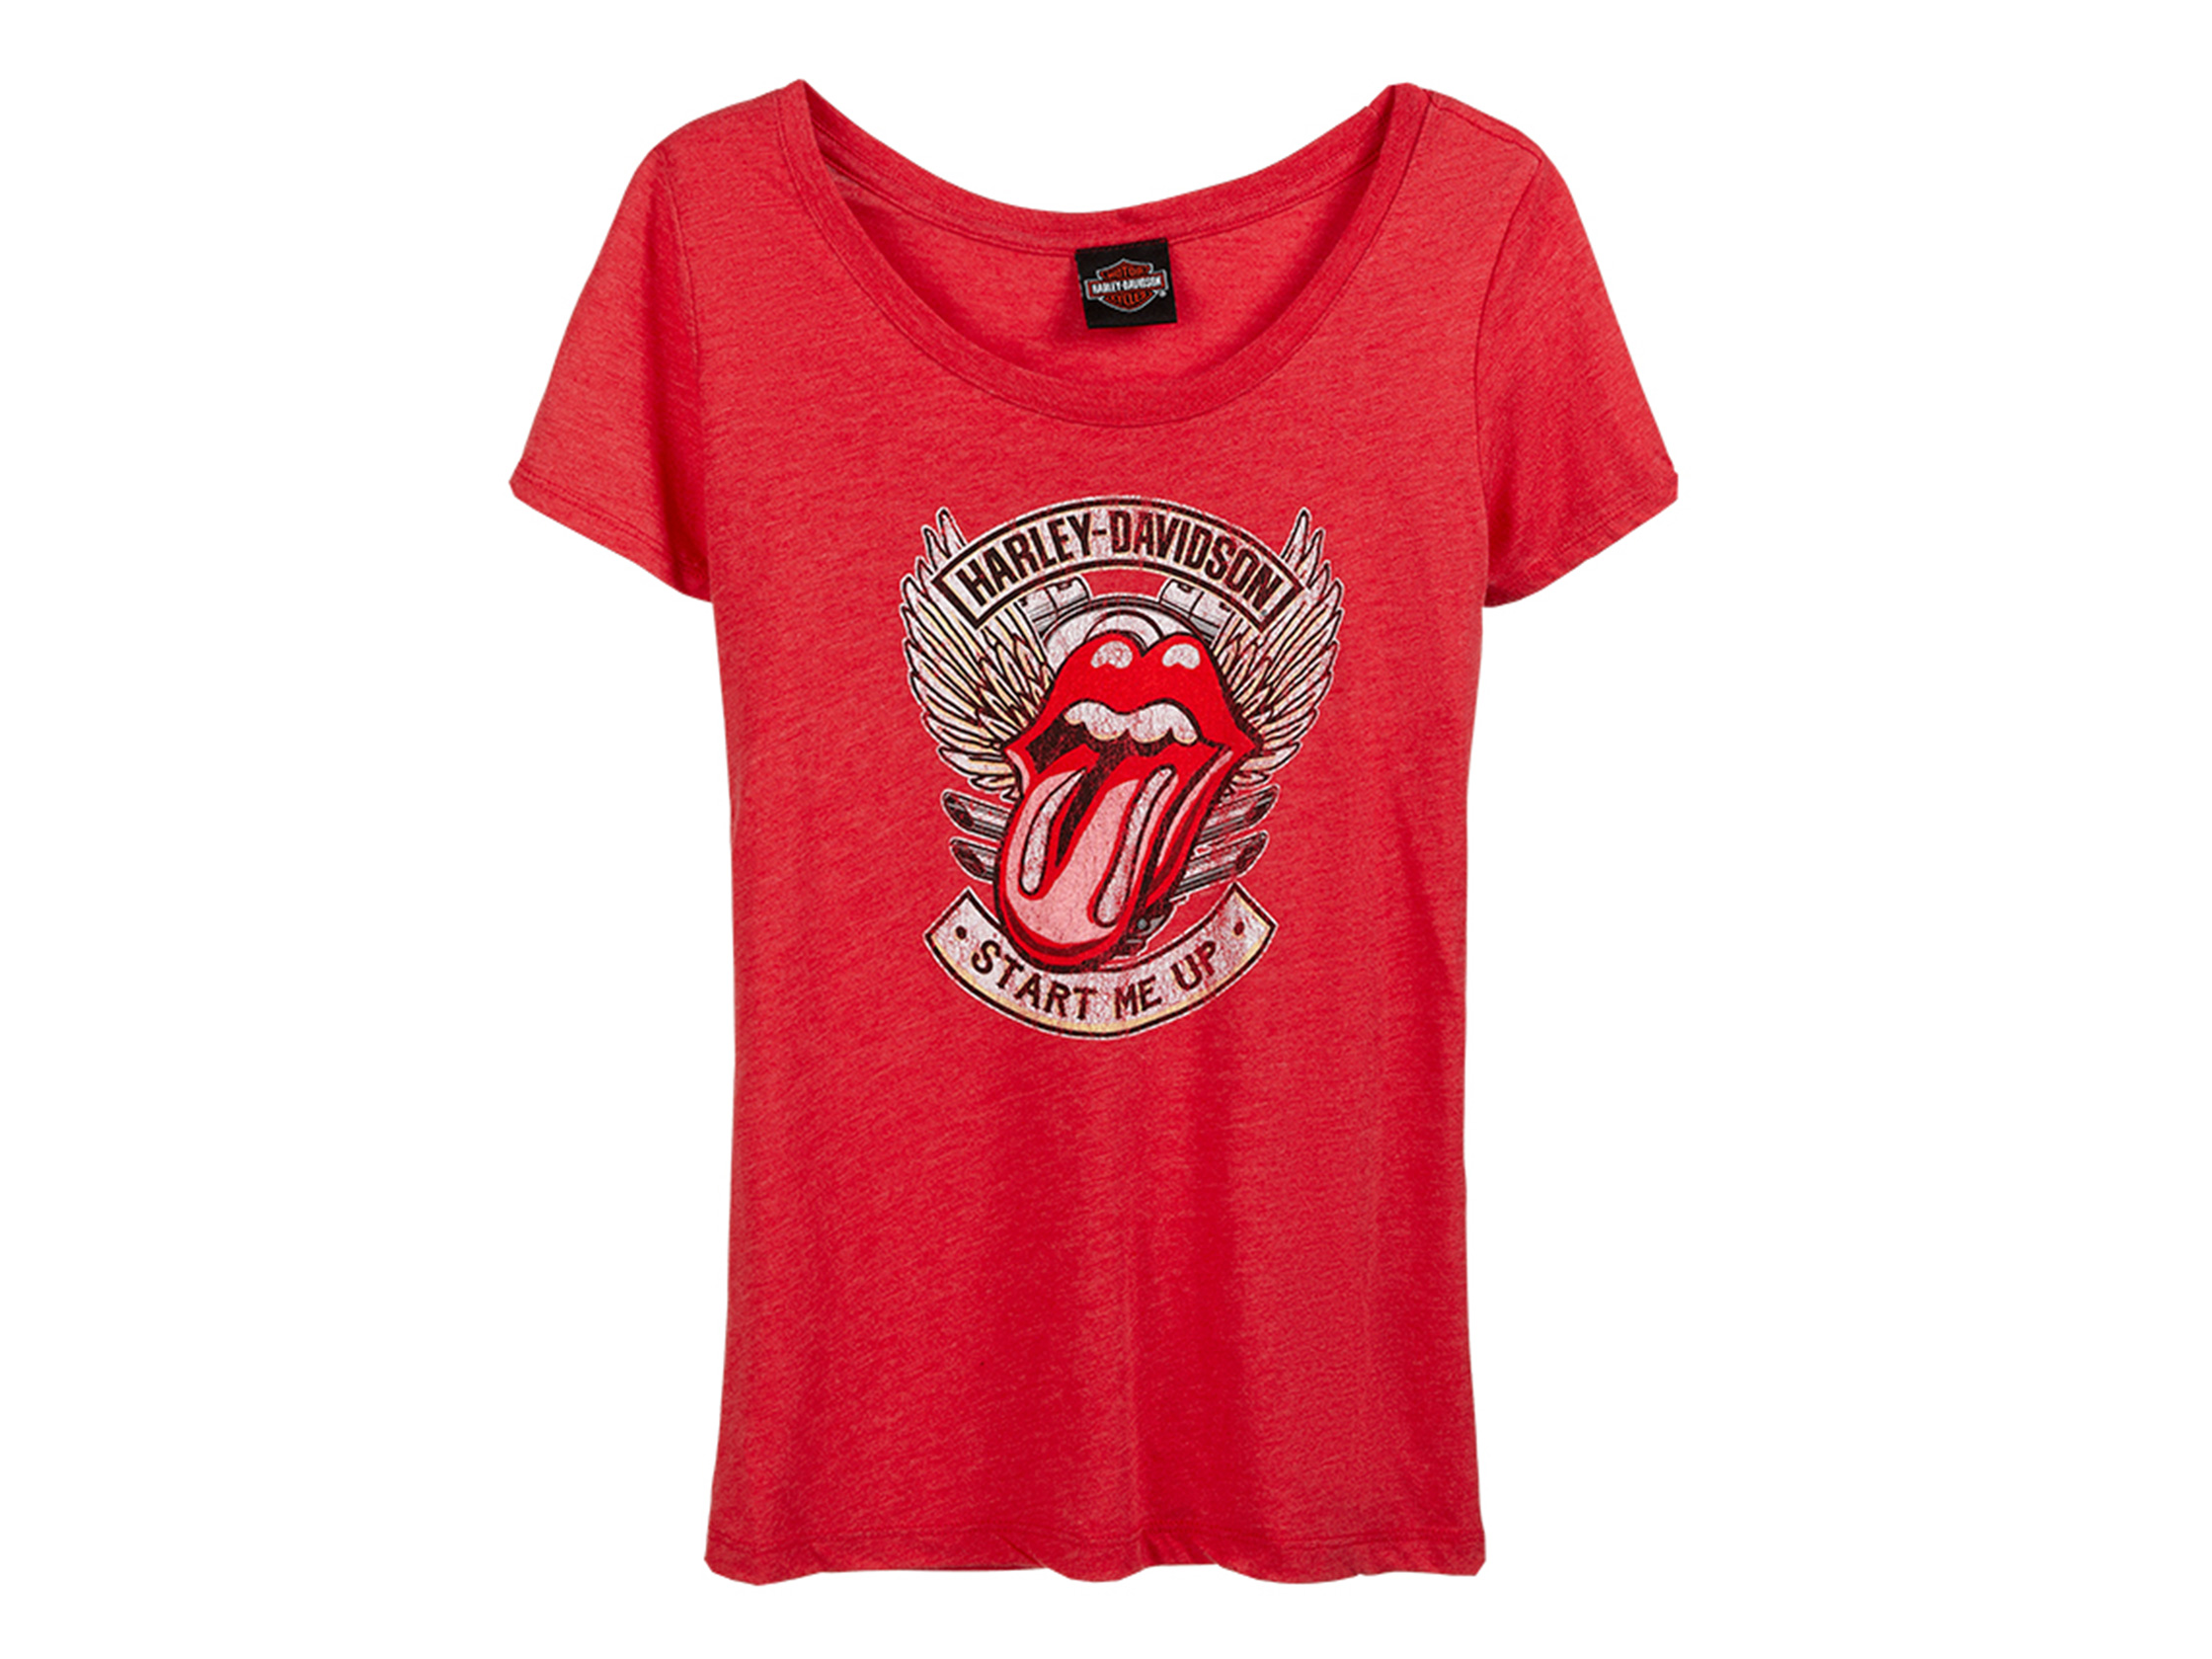 T-Shirt Rolling Stones - Start me up Red BRA-30298897 / T-Shirts (Munich)  / Women / Clothing / - House-of-Flames Harley-Davidson